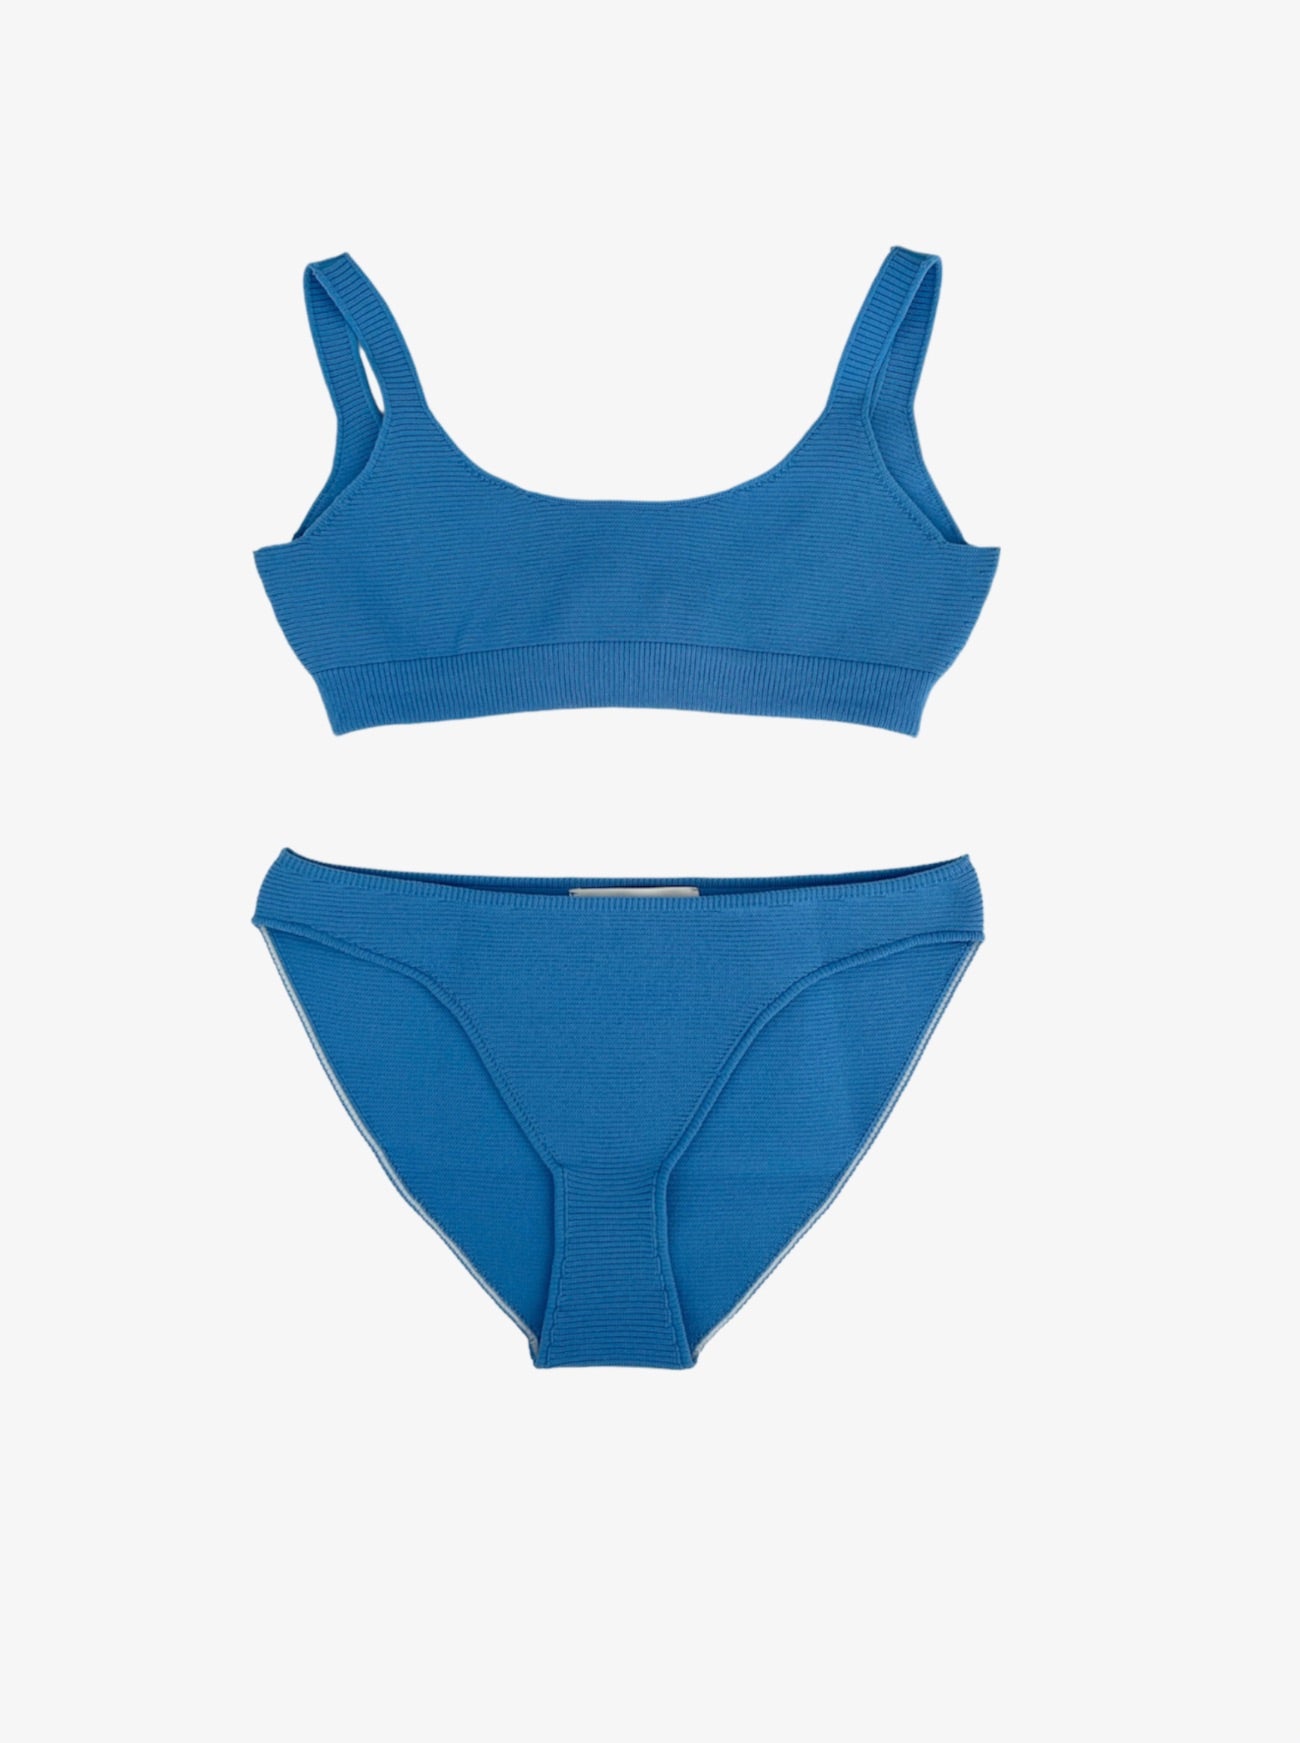 pacific blue swim suit